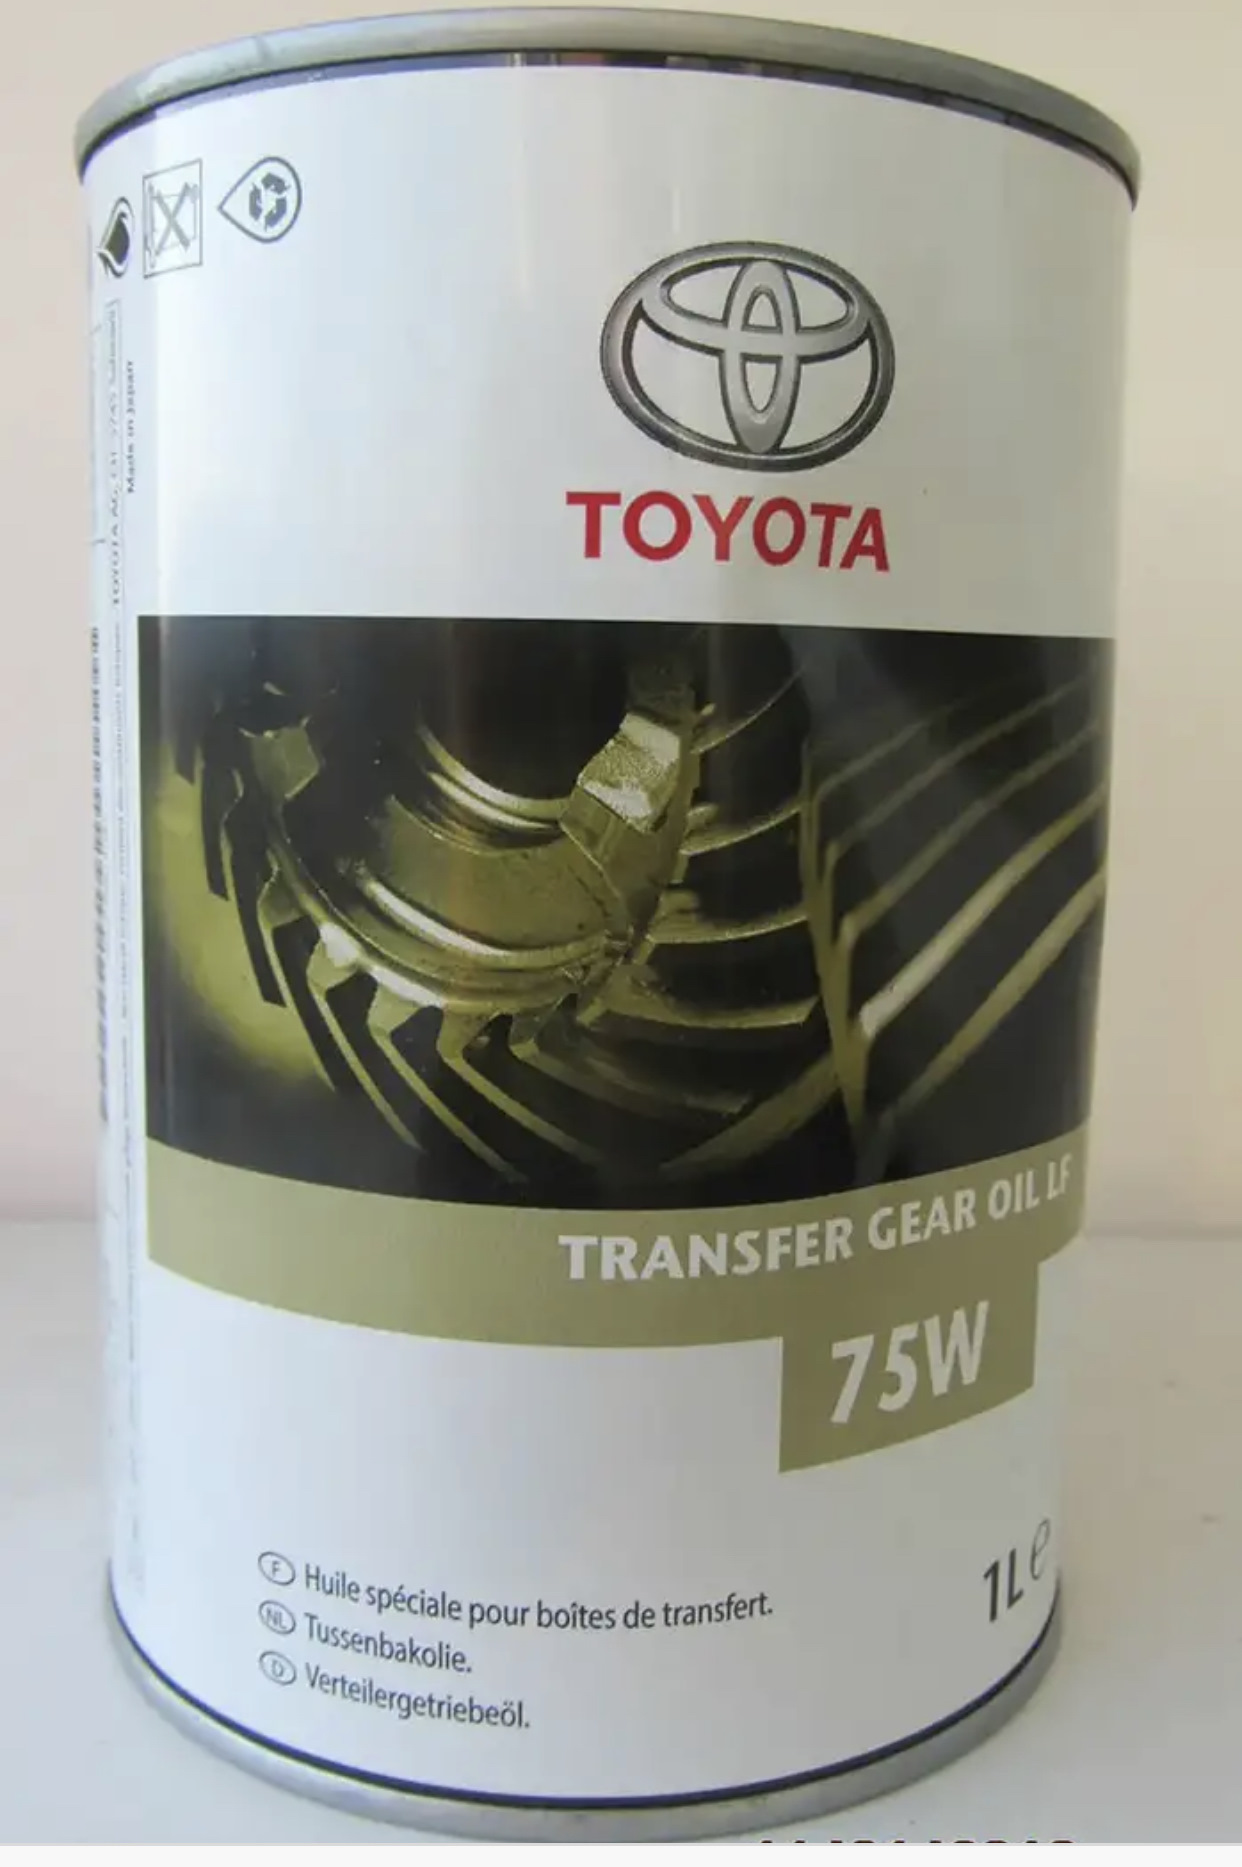 Трансмиссионное масло lf. Toyota Genuine transfer Gear Oil LF 75w. Toyota Genuine transfer Gear Oil LF SAE 75w. Toyota transfer Gear Oil LF SAE 75w. SAE 75w Toyota LF.